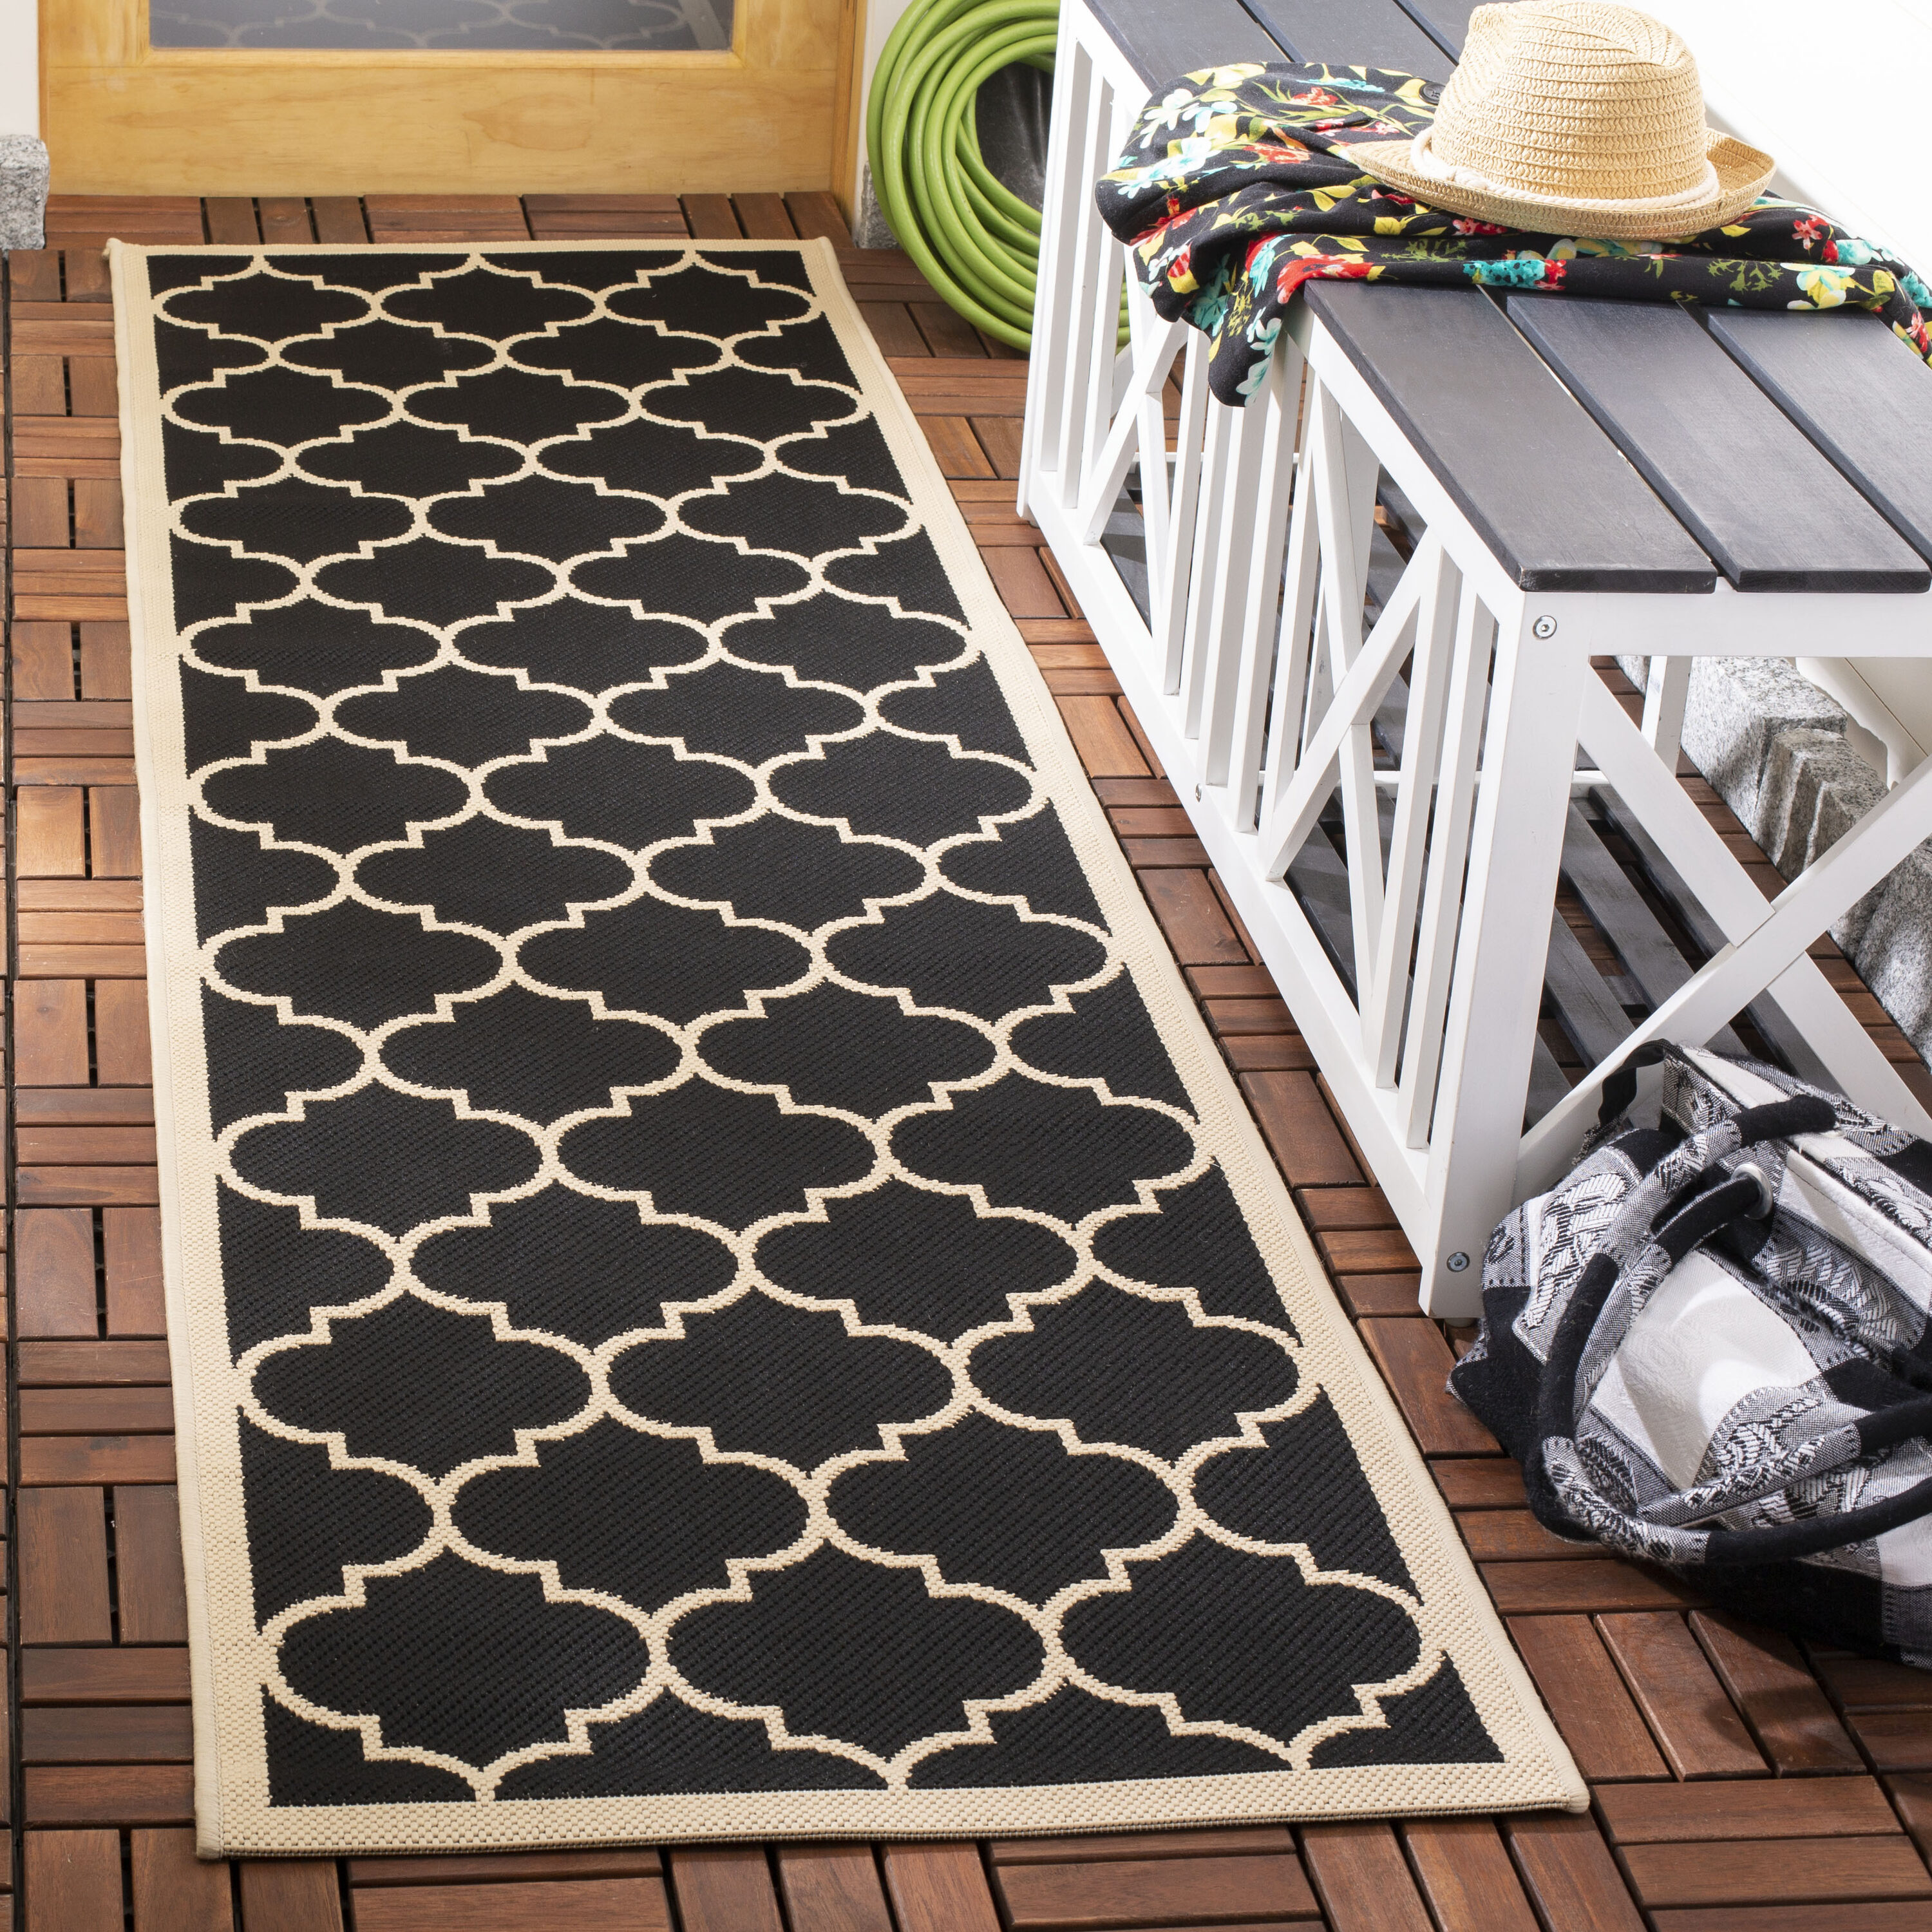 Black & Bone Plaid Outdoor Rug - Safavieh.com  Outdoor rugs, Outdoor rugs  patio, Front porch decorating